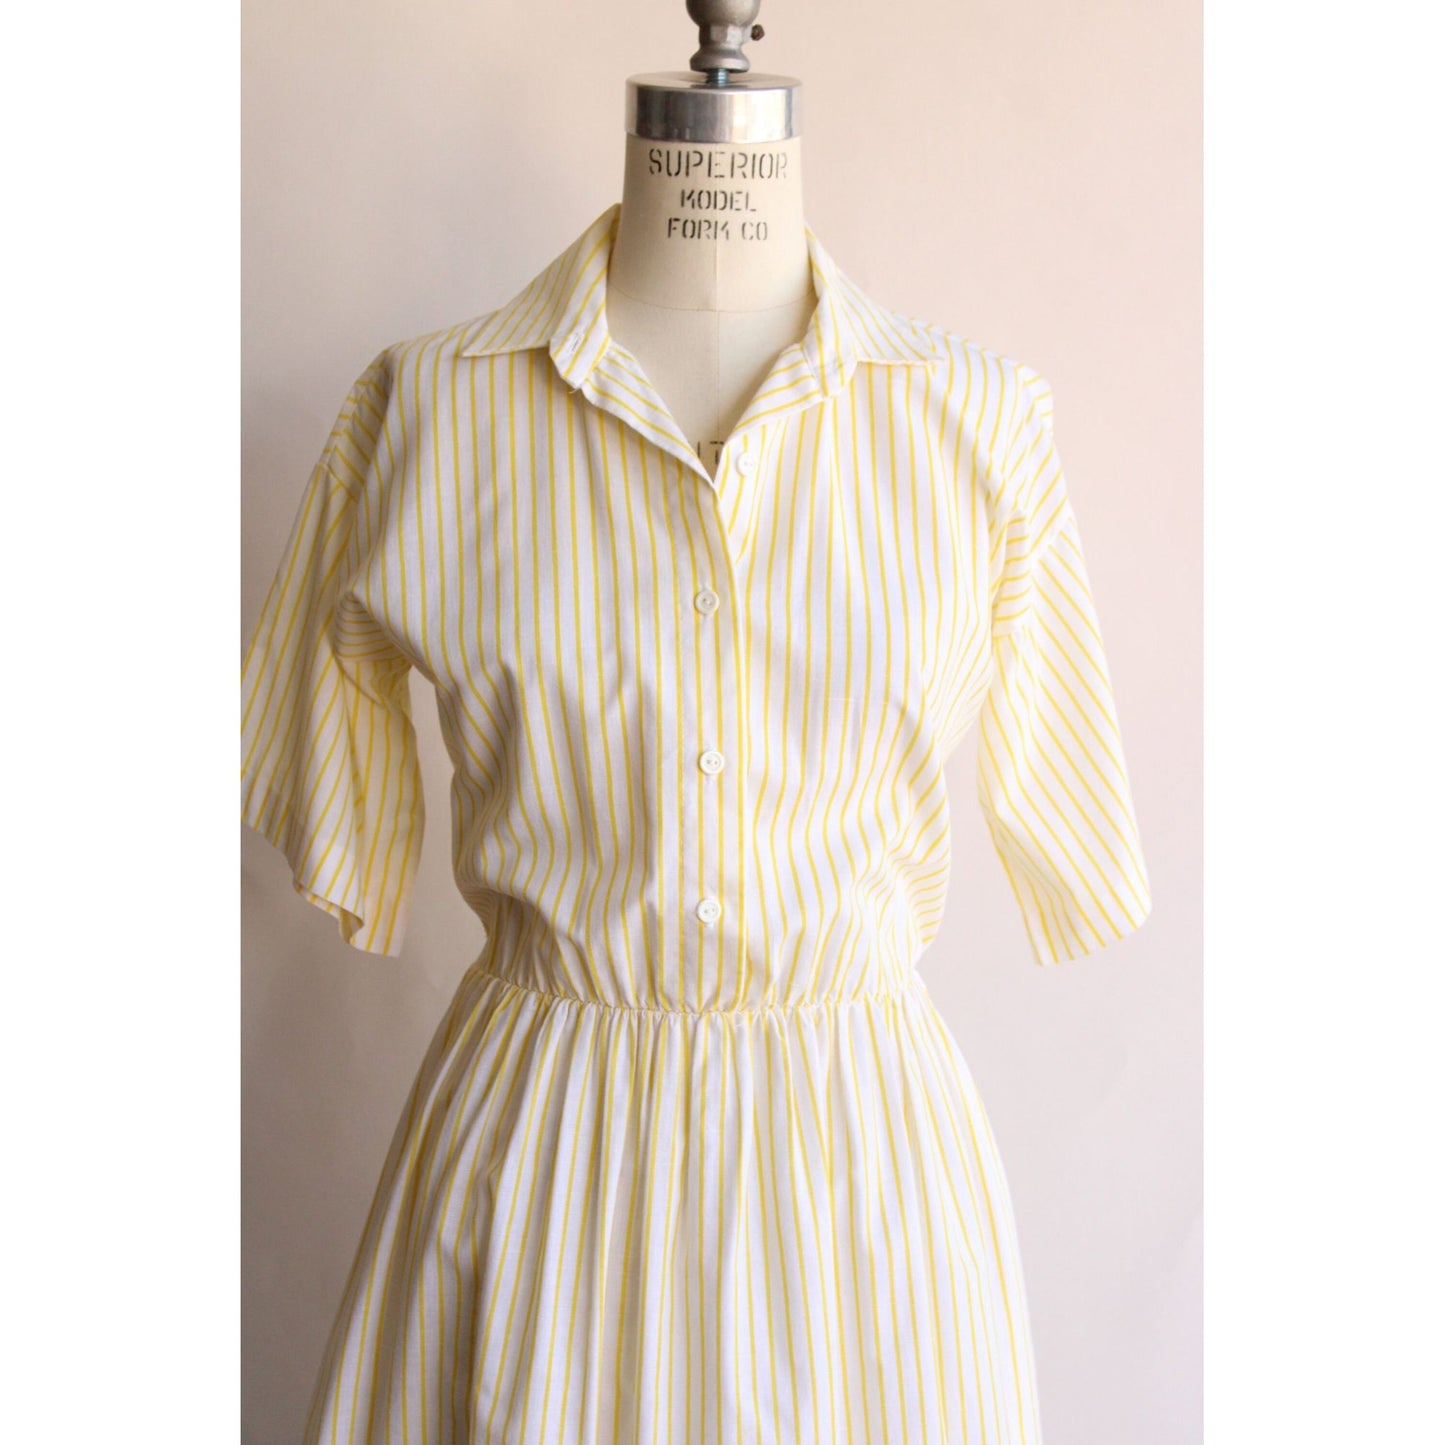 Vintage 1970s 1980s Yellow Striped Shirtwaist Dress